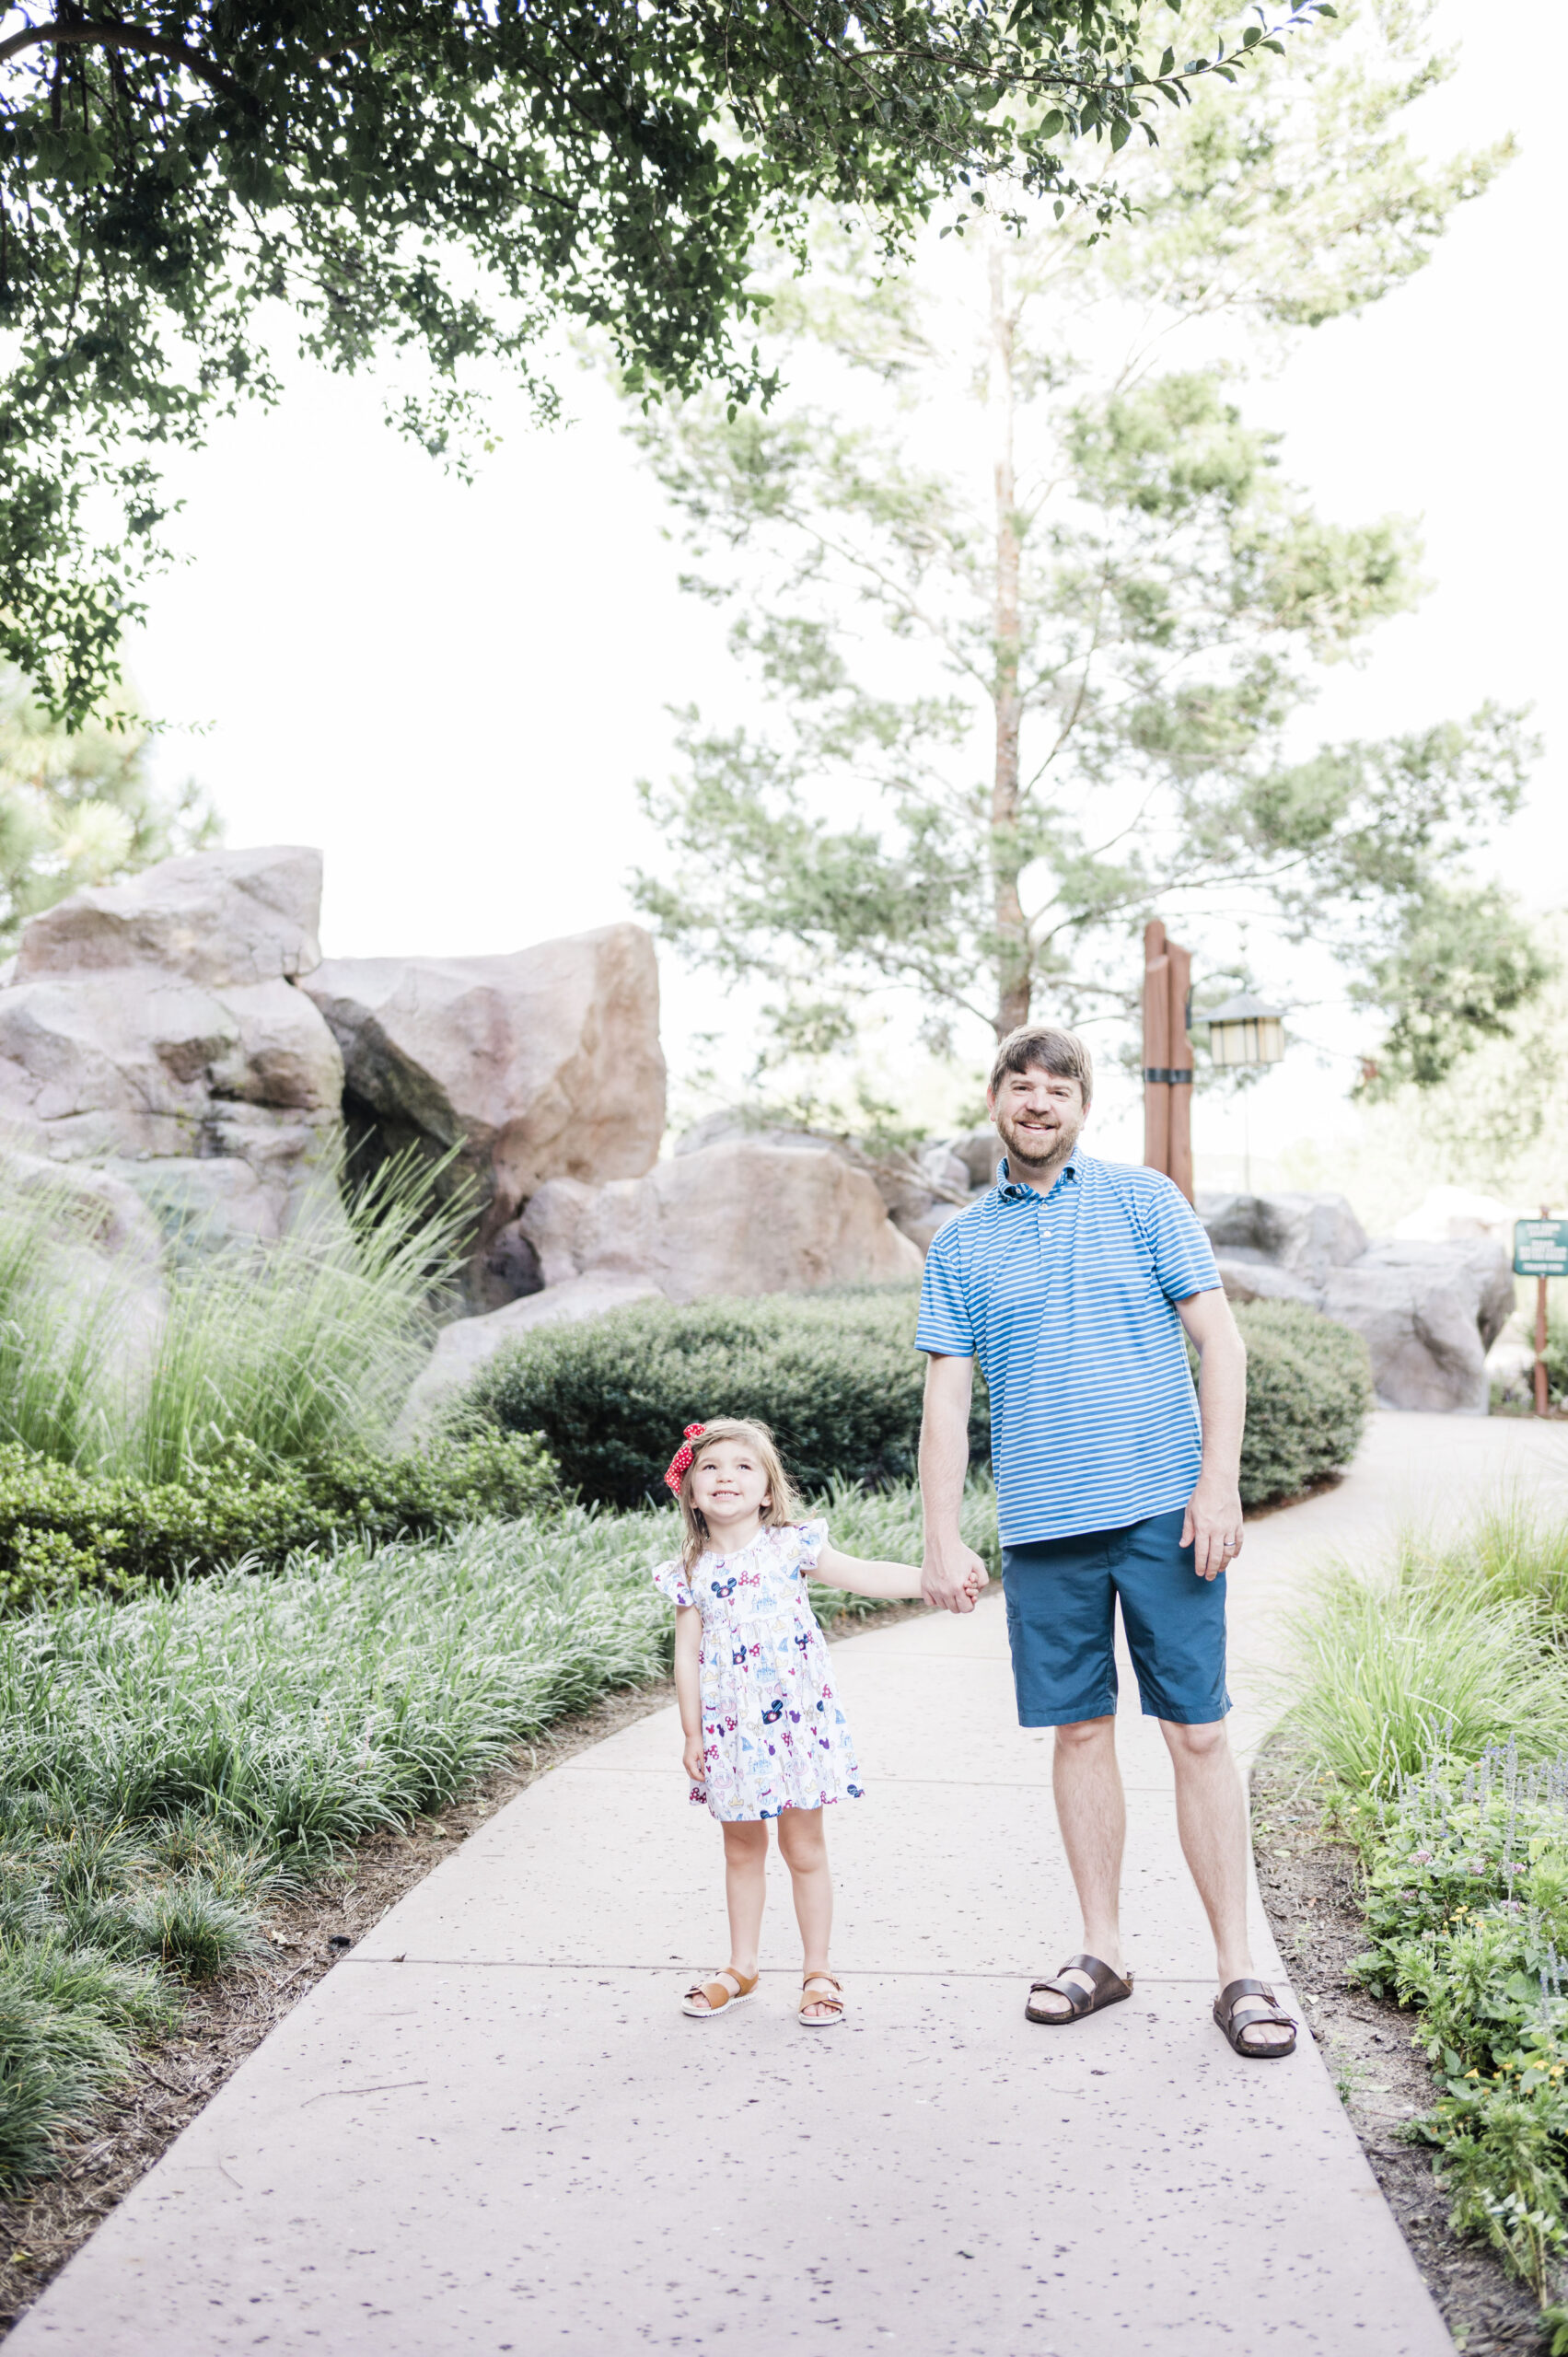 John Naylor and daughter holding hands outside on sidewalk at Disney's Wilderness Lodge
